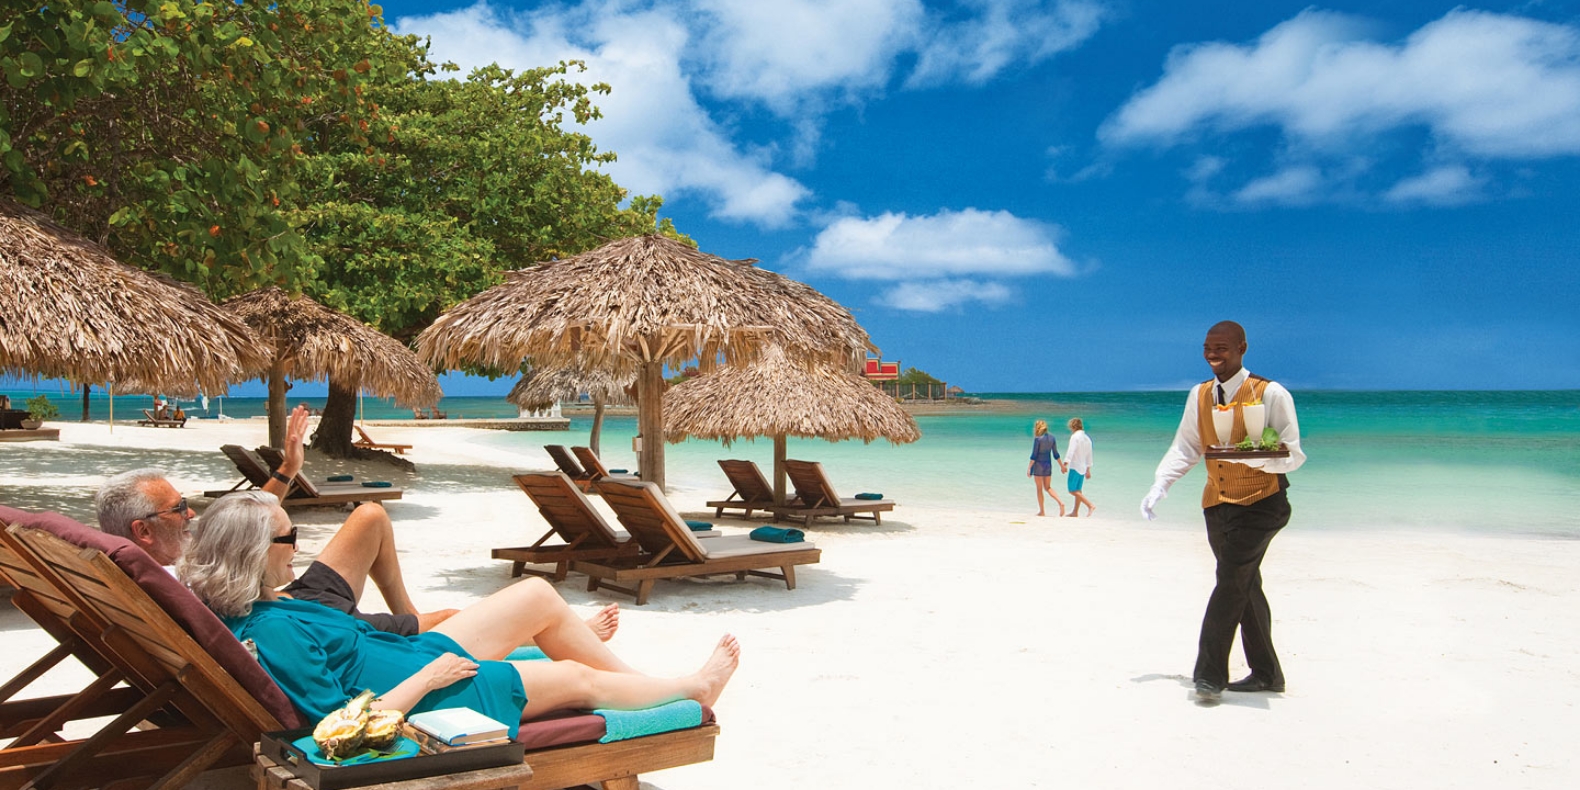 Sandals Royal Caribbean, Jamaica Holidays, Destination2